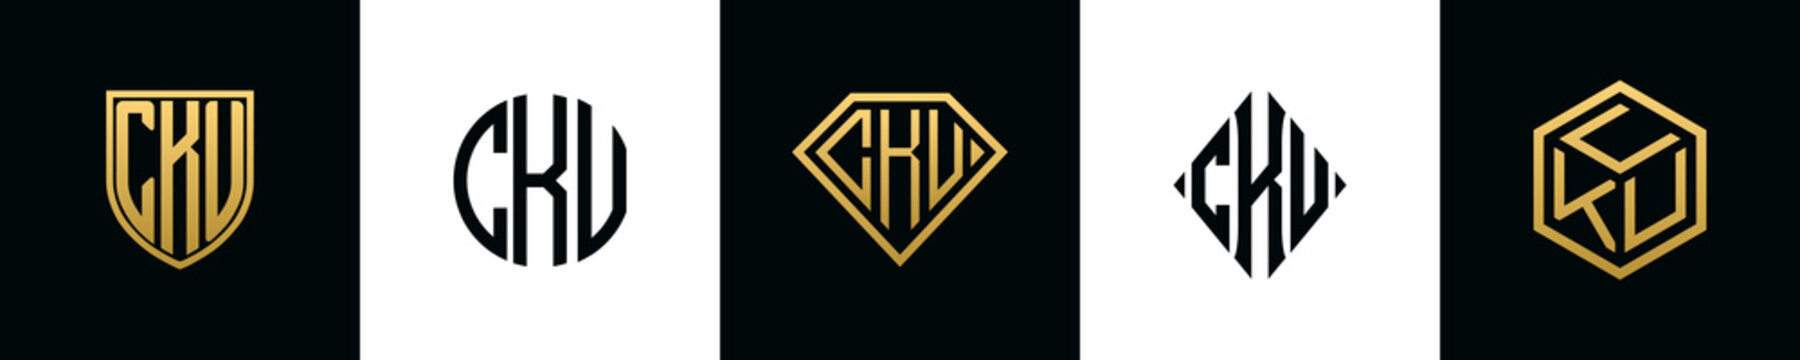 Initial letters CKU logo designs Bundle